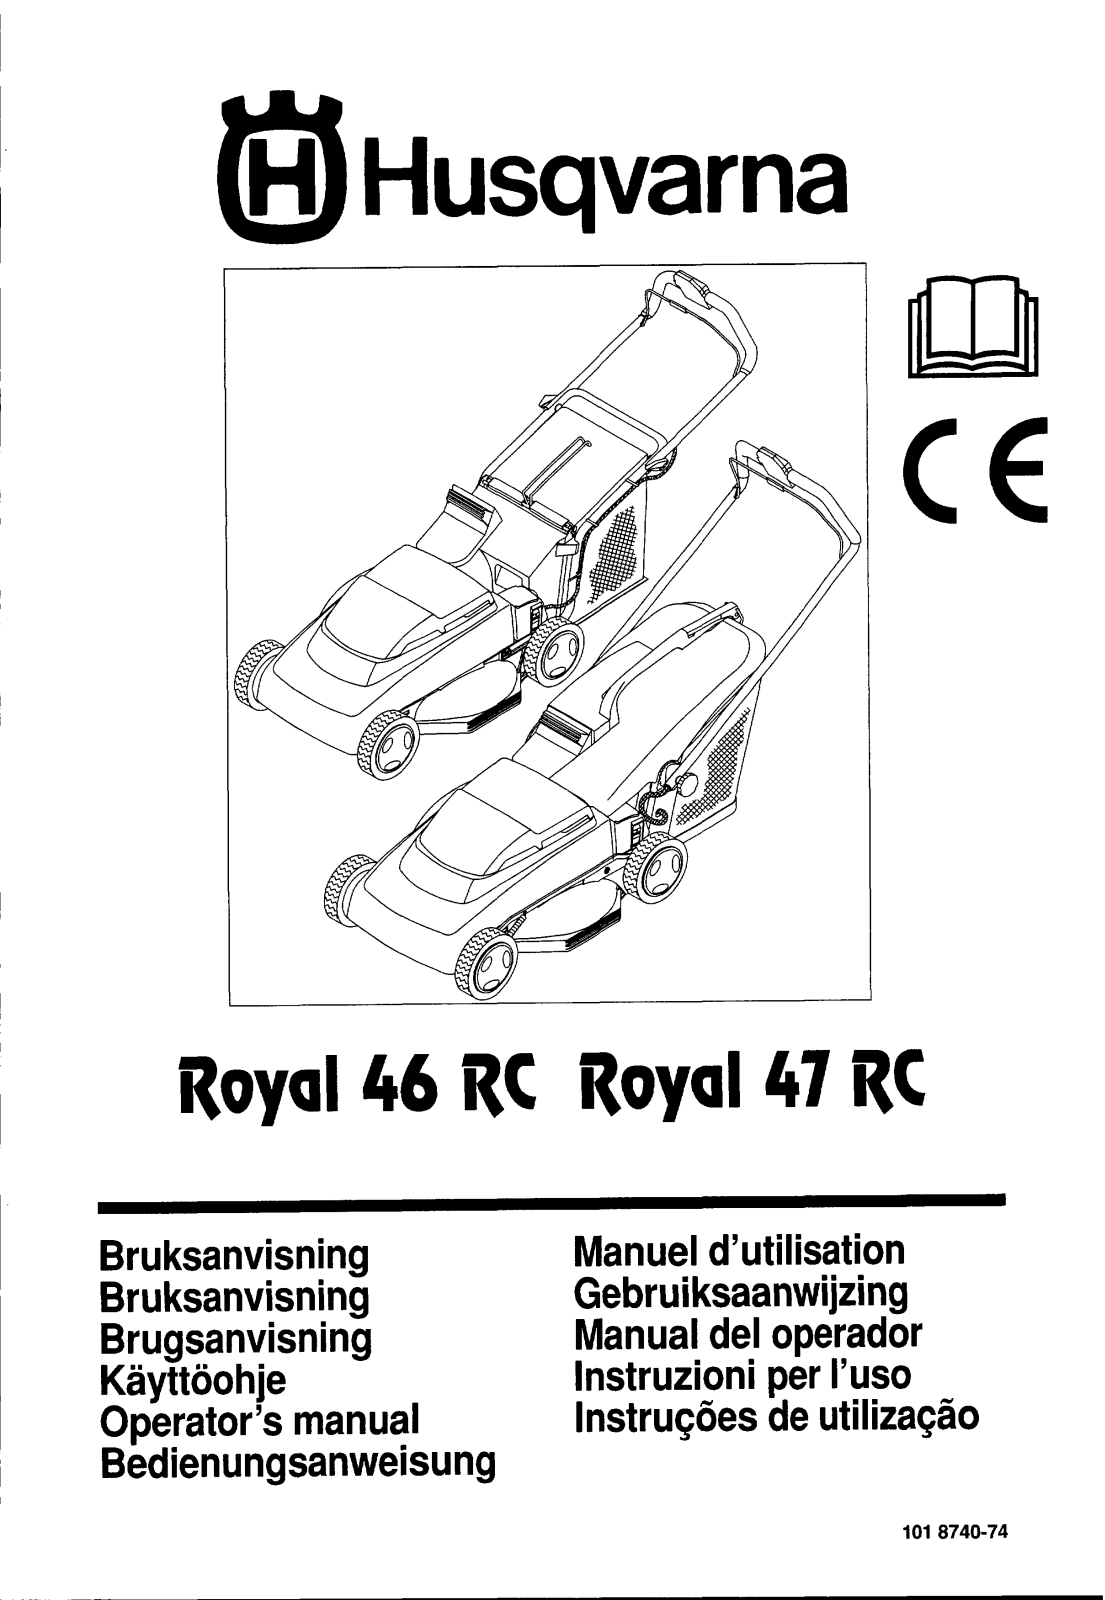 Husqvarna 46 RC User Manual